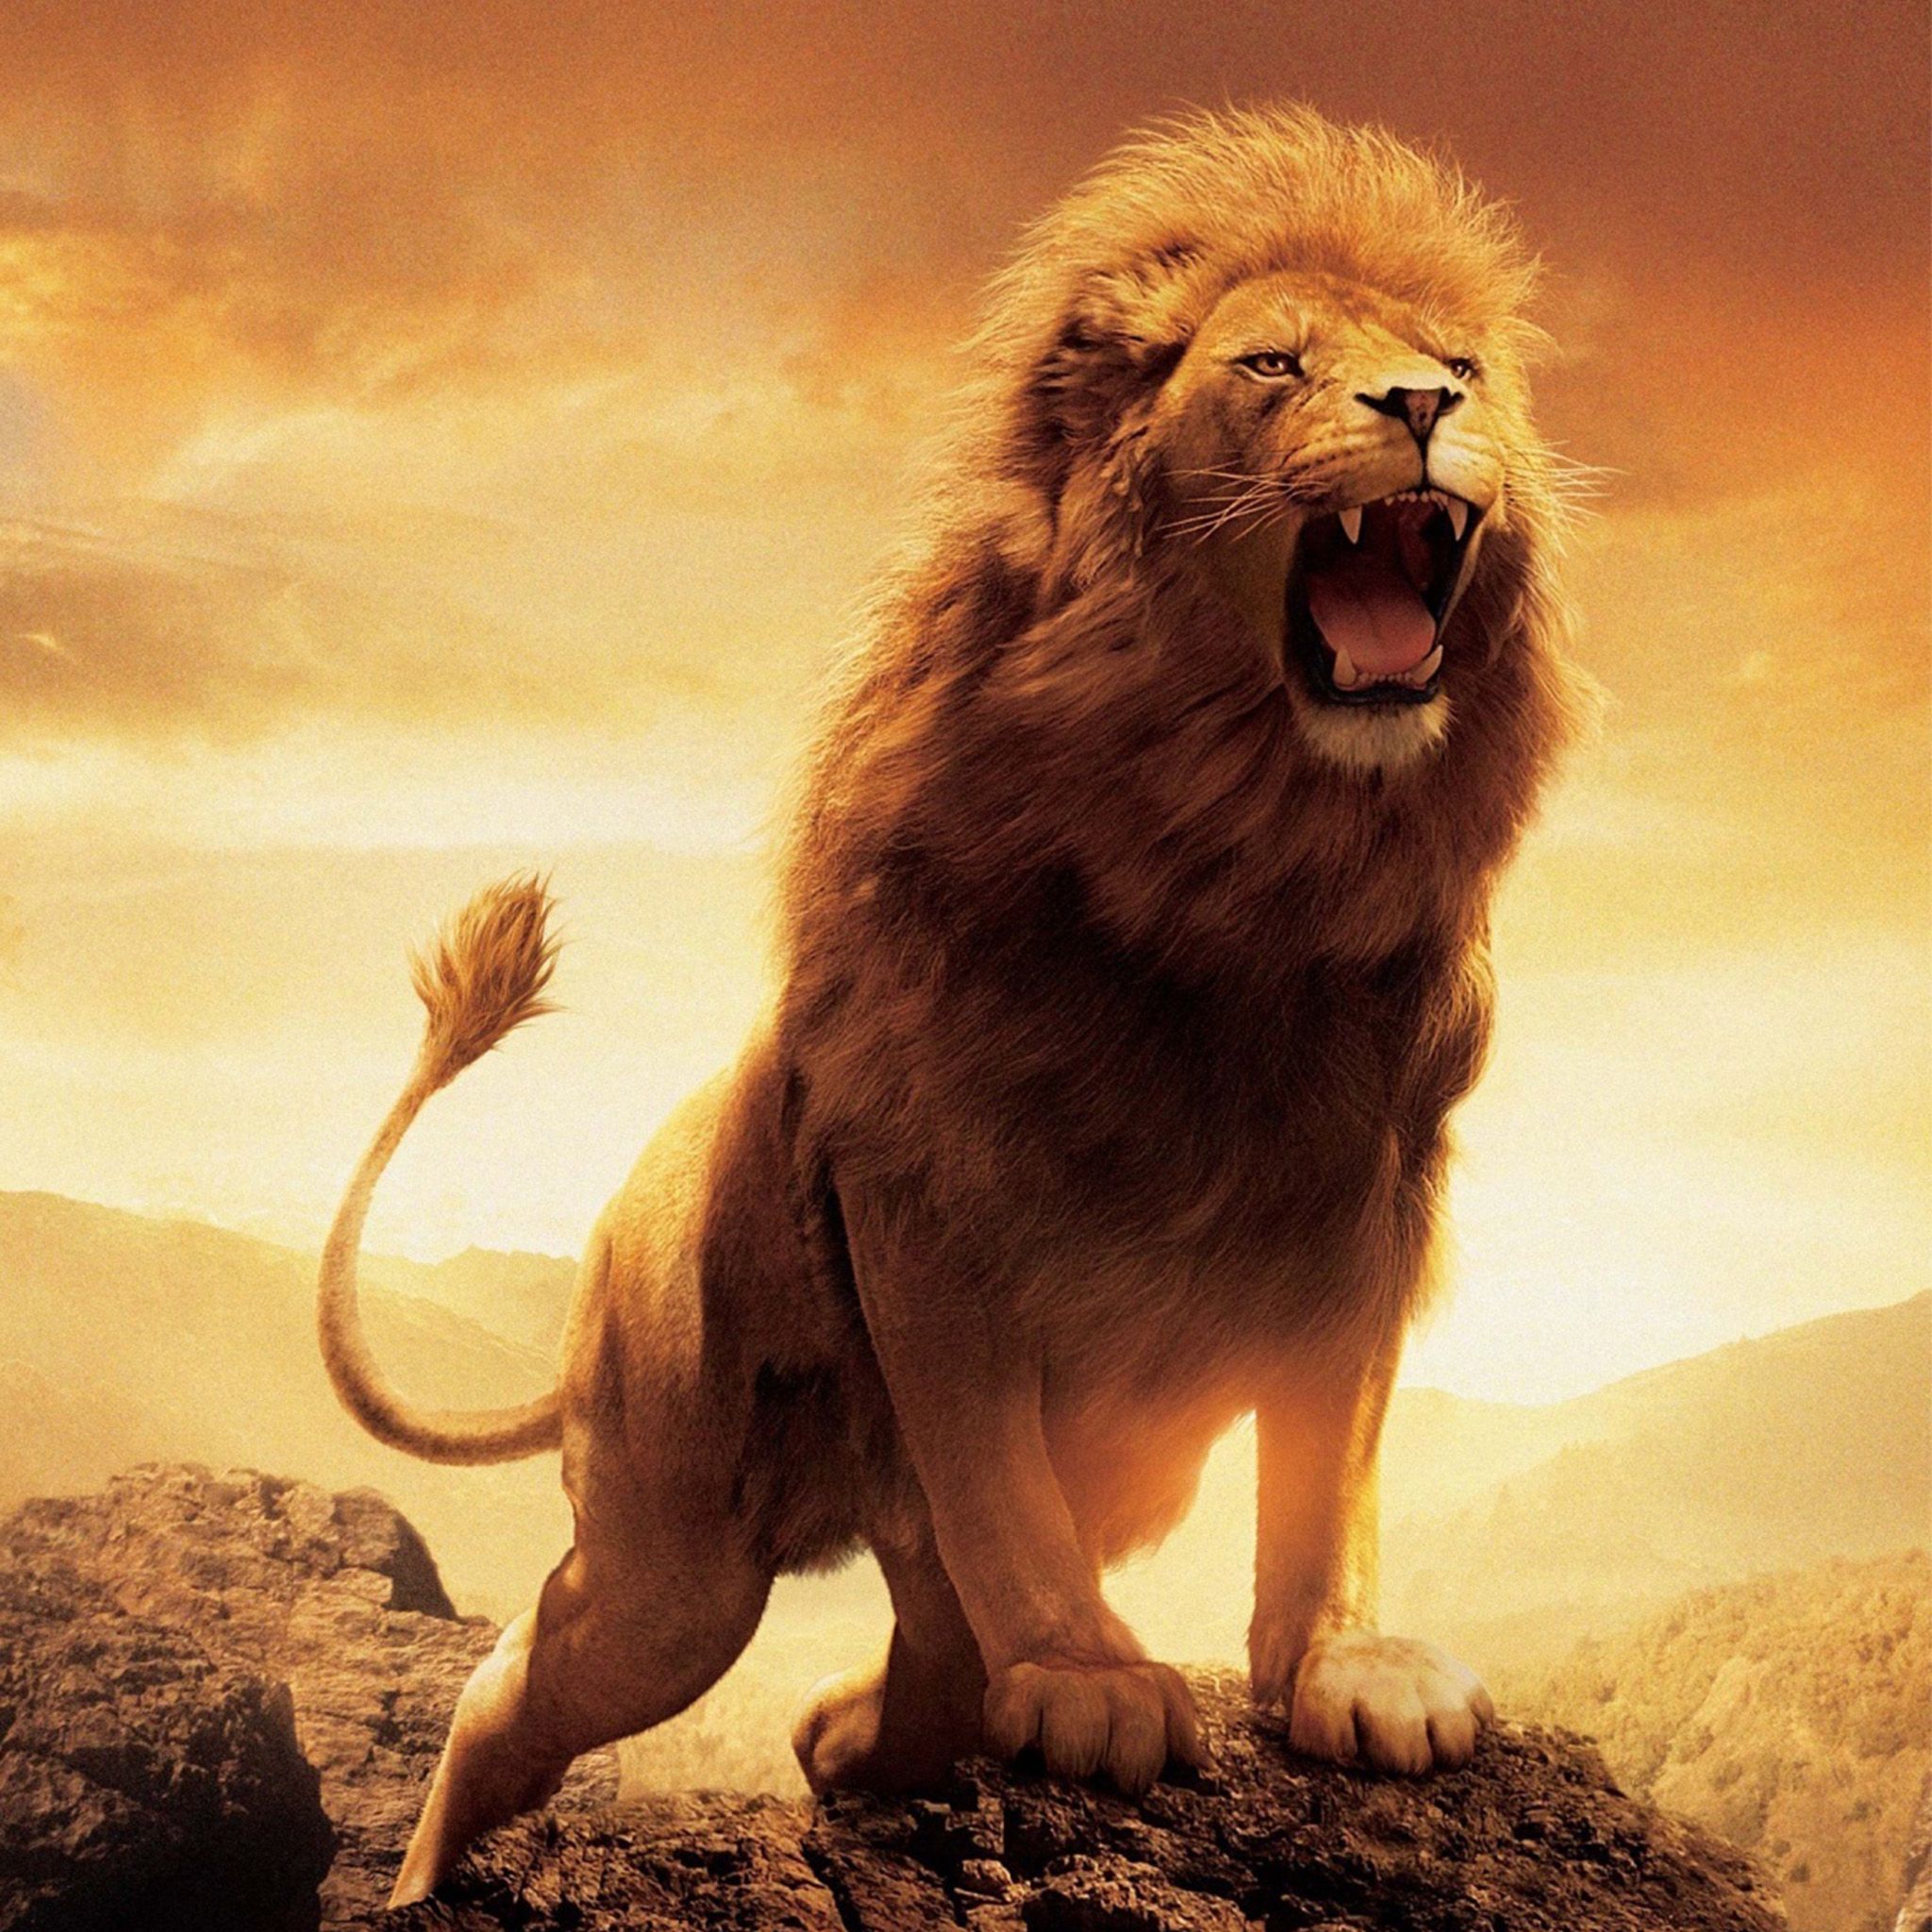 roaring lion full hd wallpapers